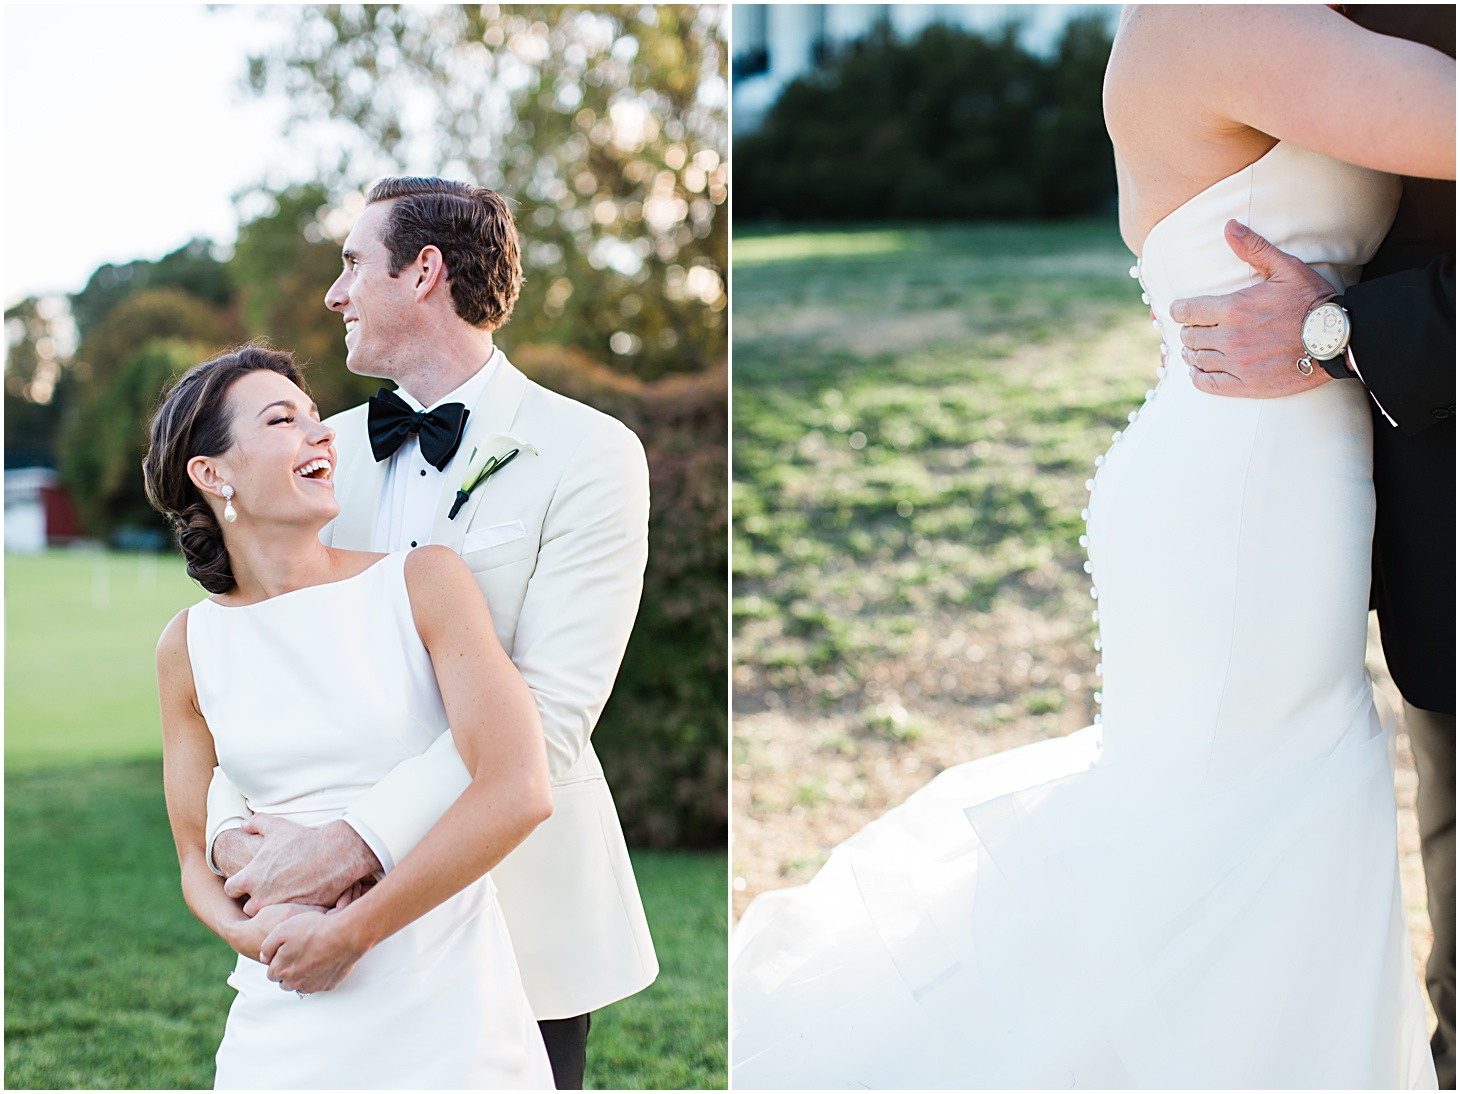 Happy Wedding Couple | Top Washington DC wedding photographer Sarah Bradshaw